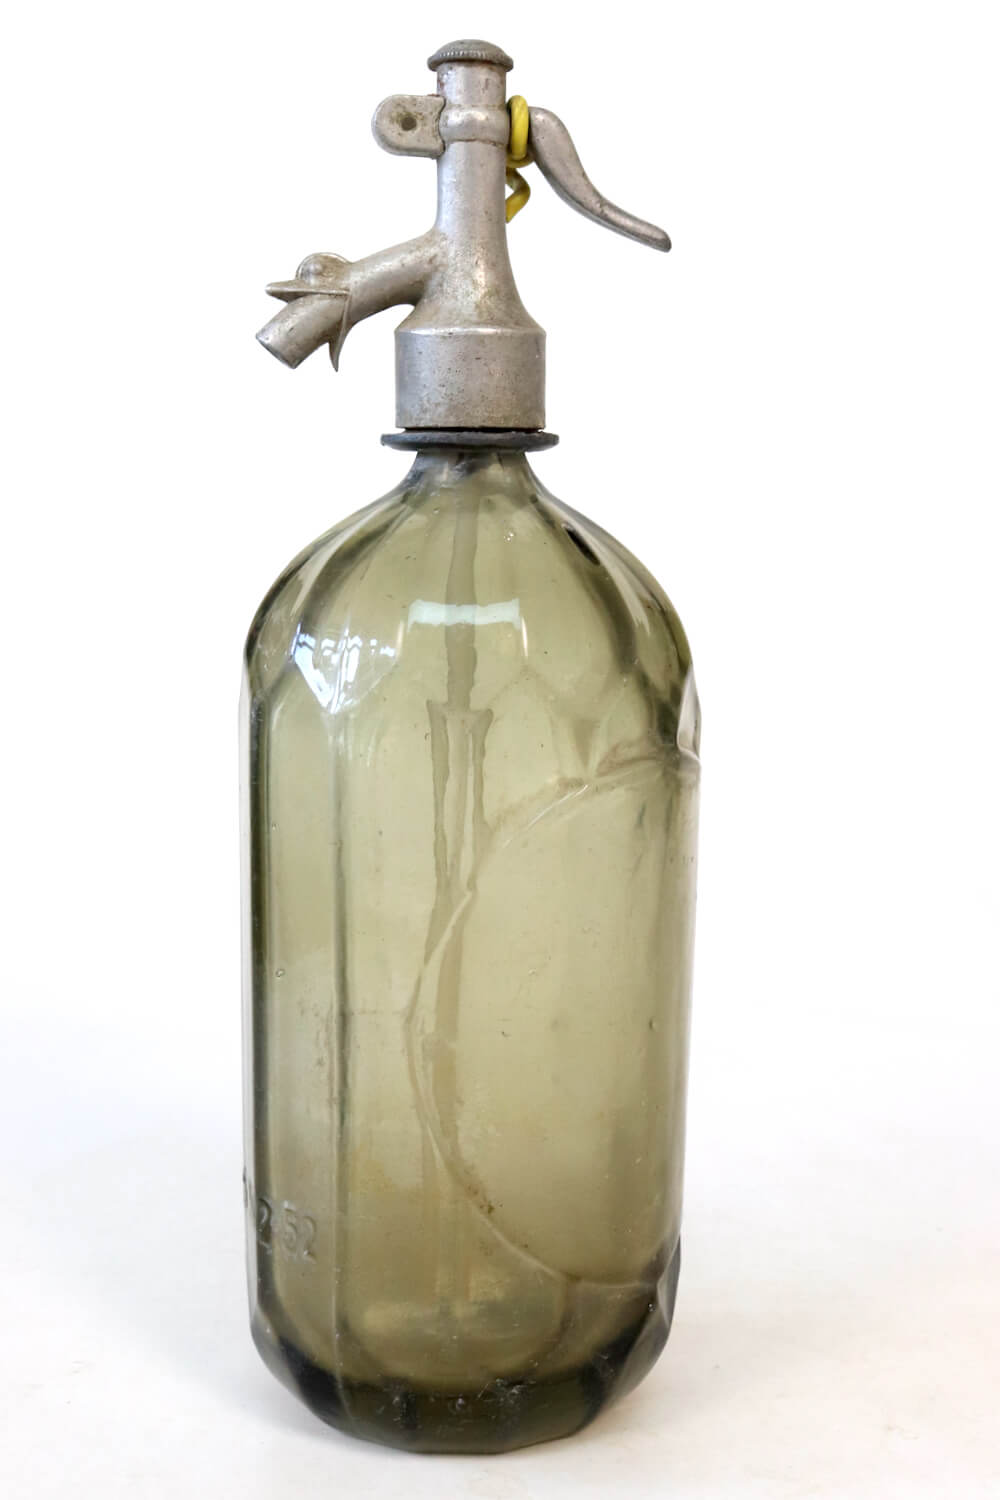 Sodaflasche antik grau, Facettenform